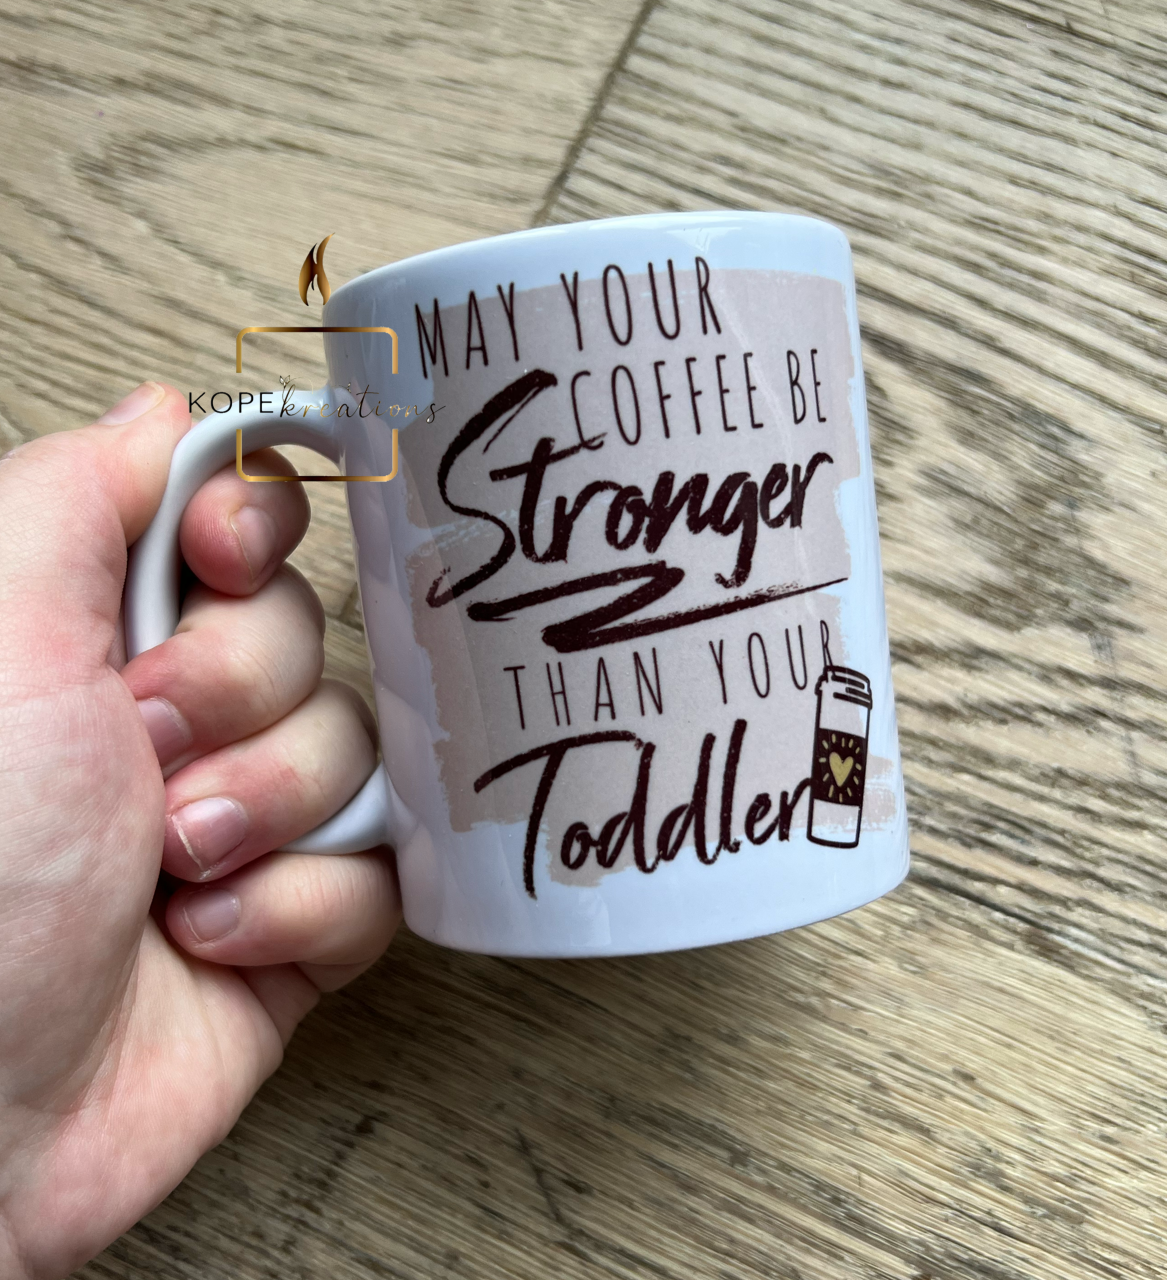 …Stronger Than Your Toddler Mug